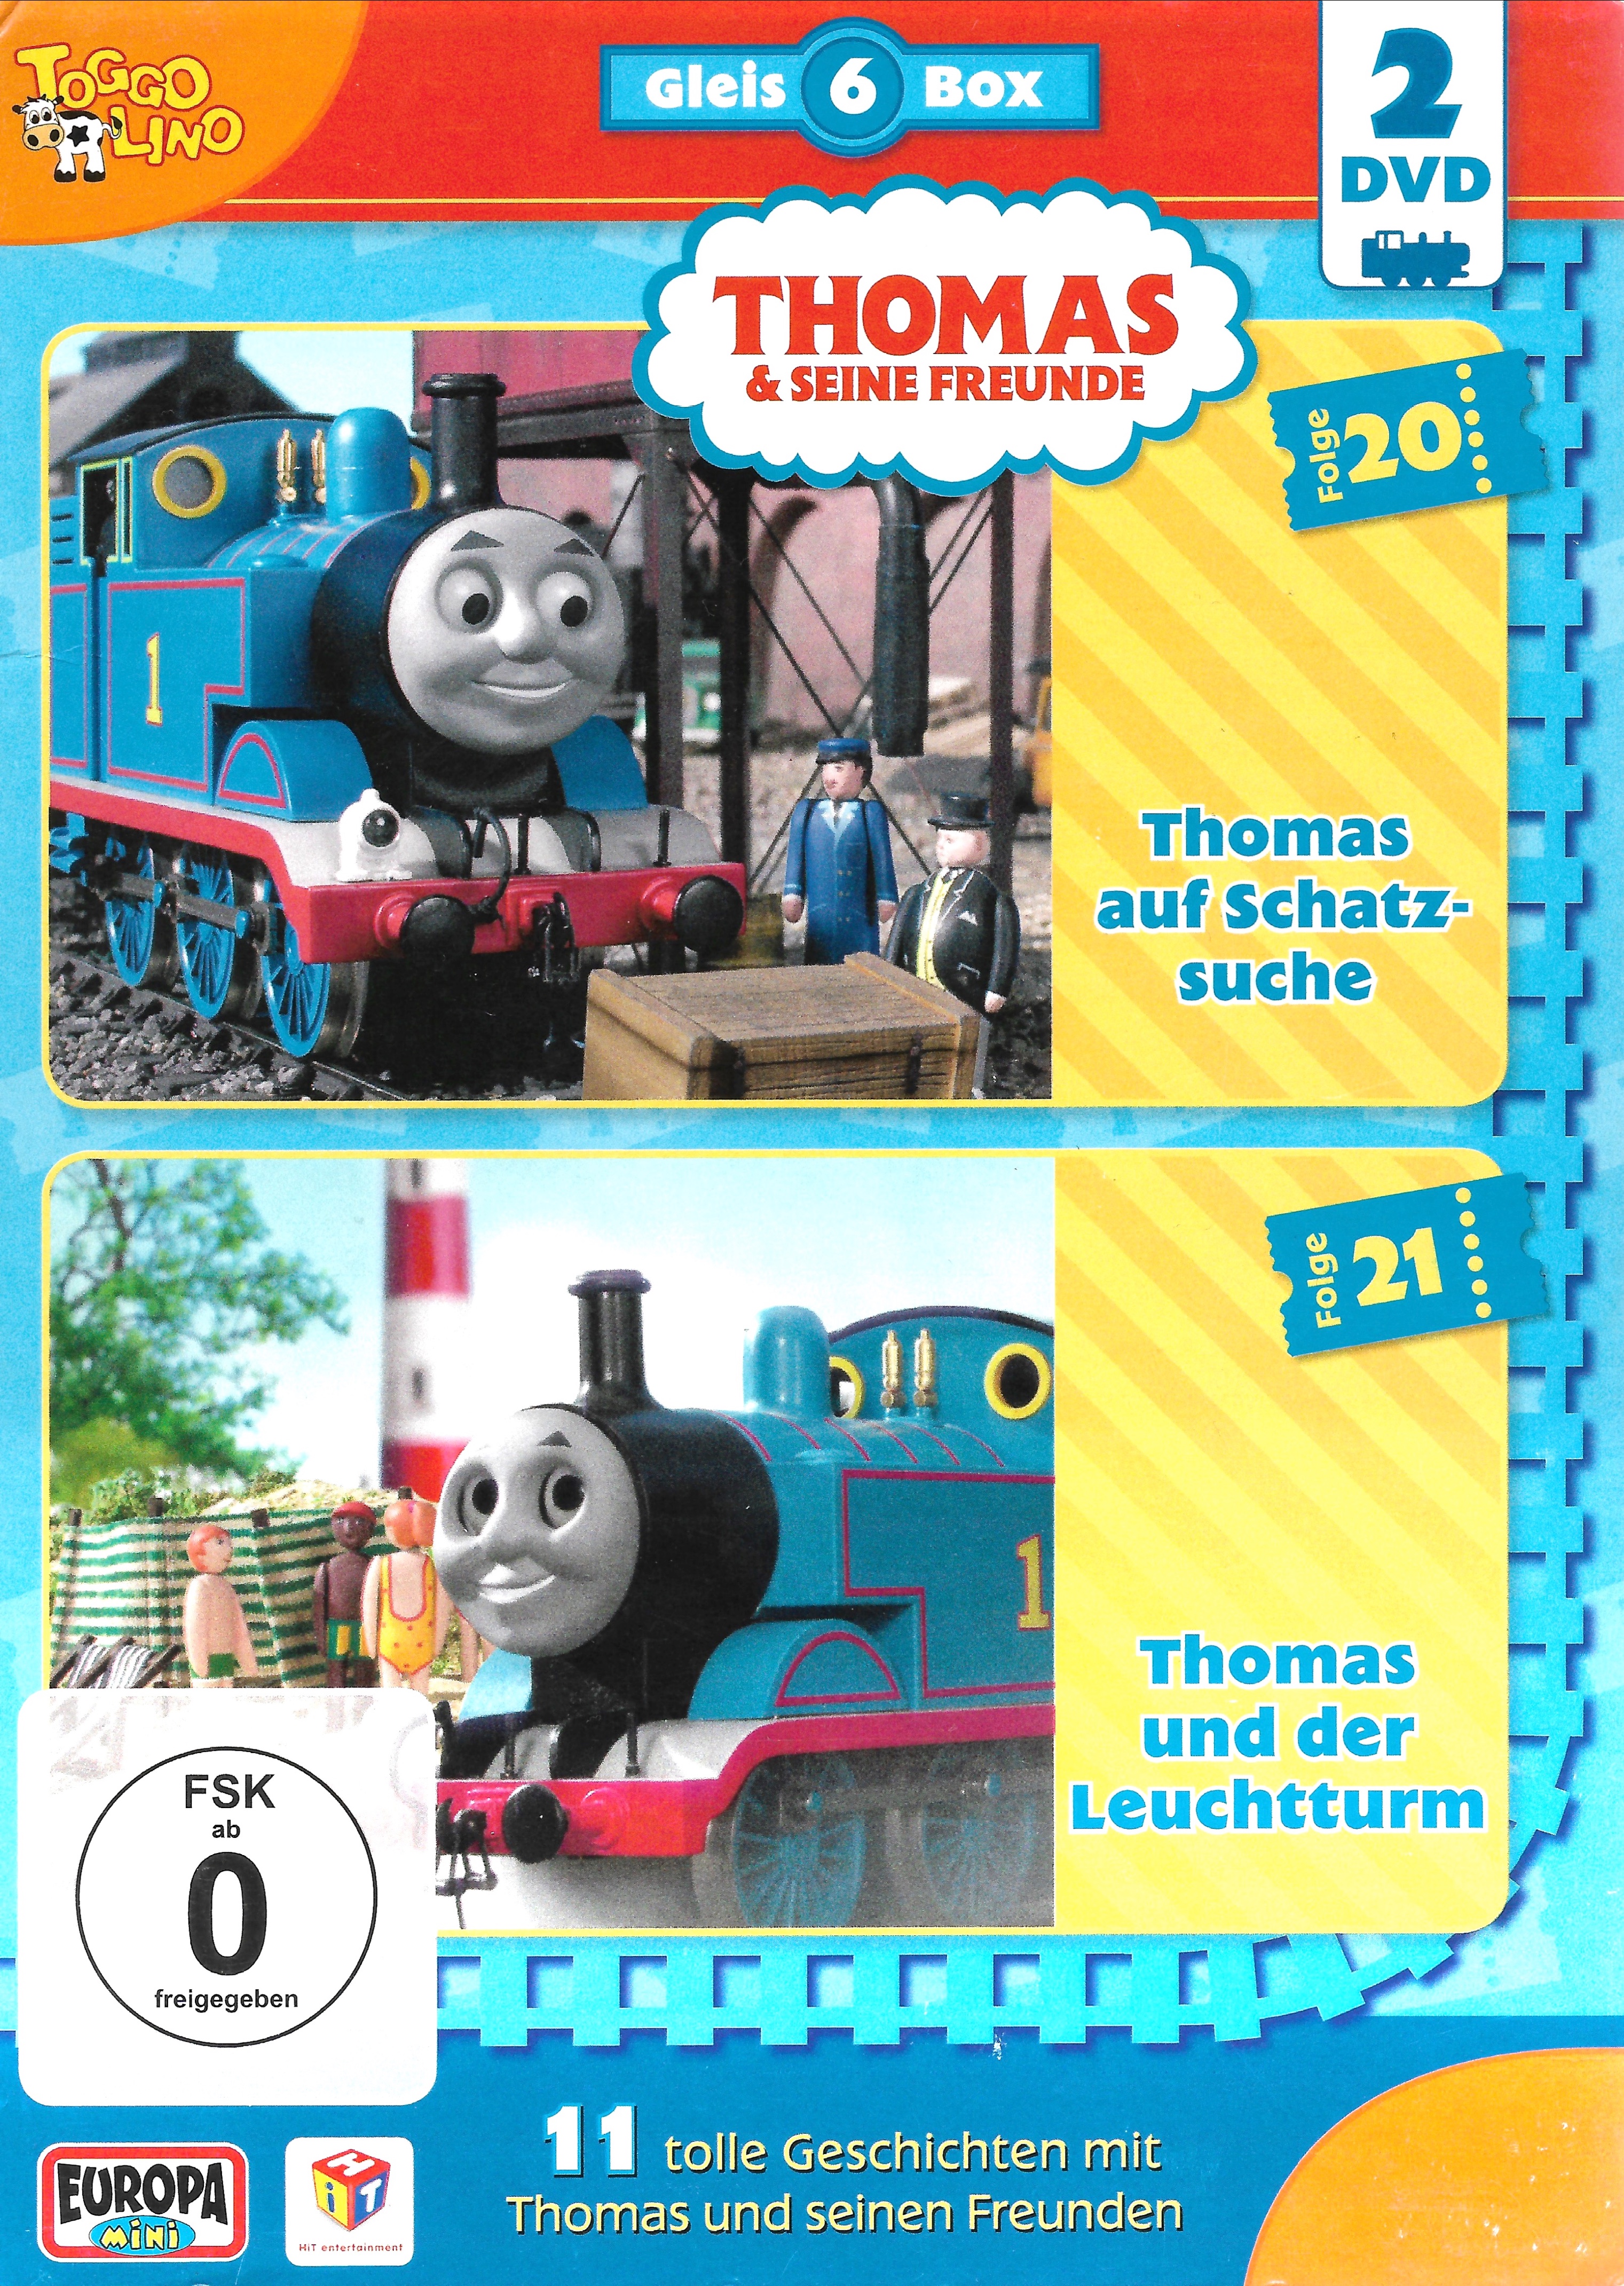 Thomas Comes Up In the Box - Thomas